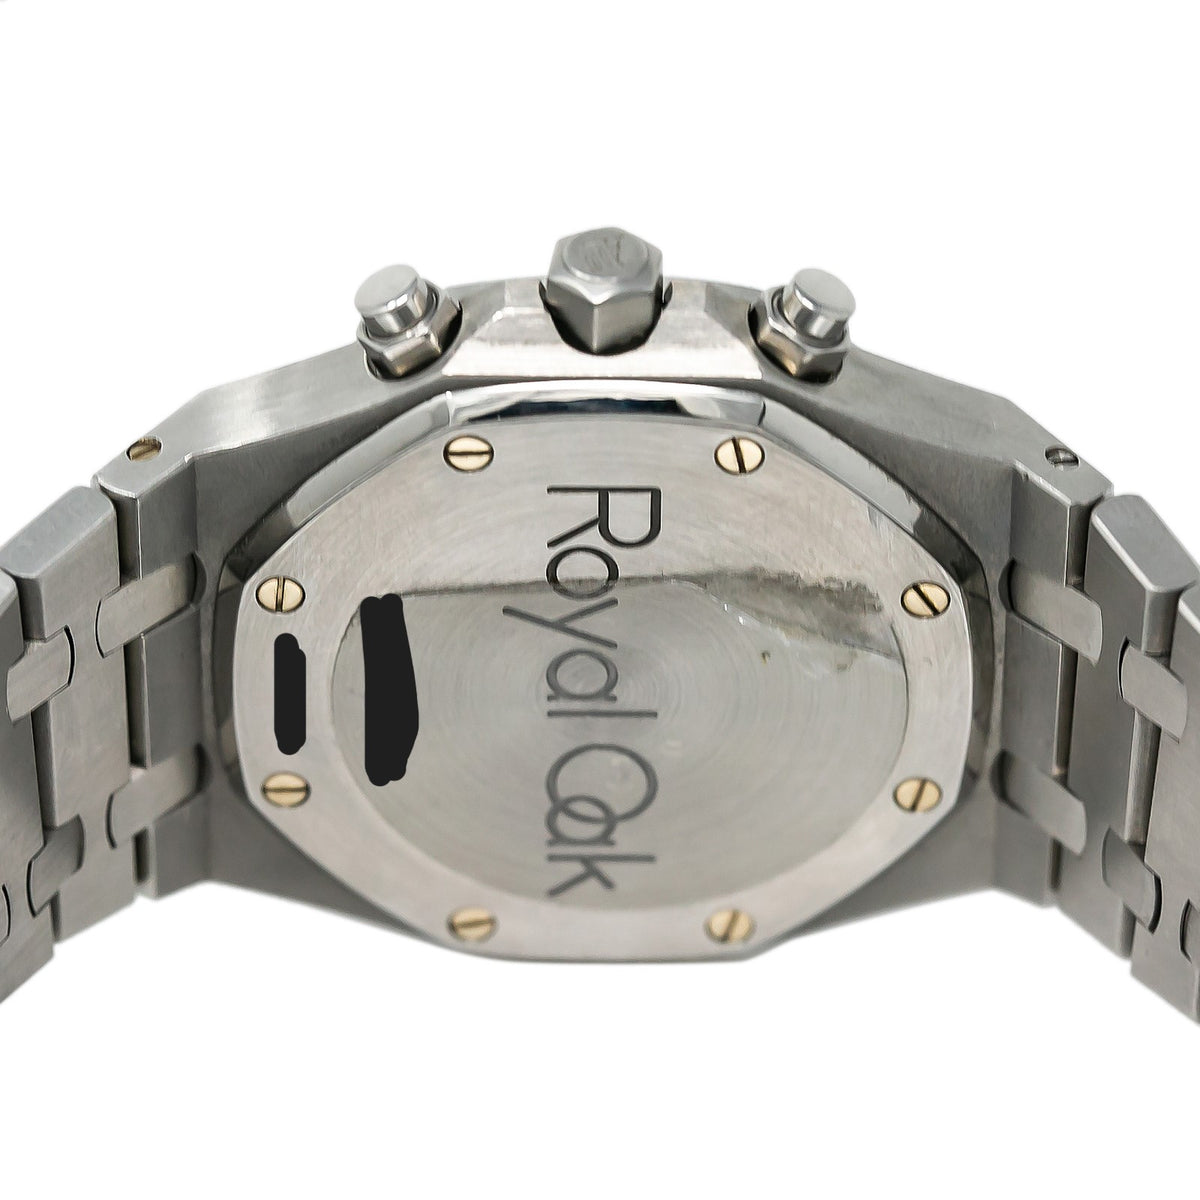 Audemars Piguet Royal Oak 25860ST MINT Steel Chronograph White Dial Watch 39mm